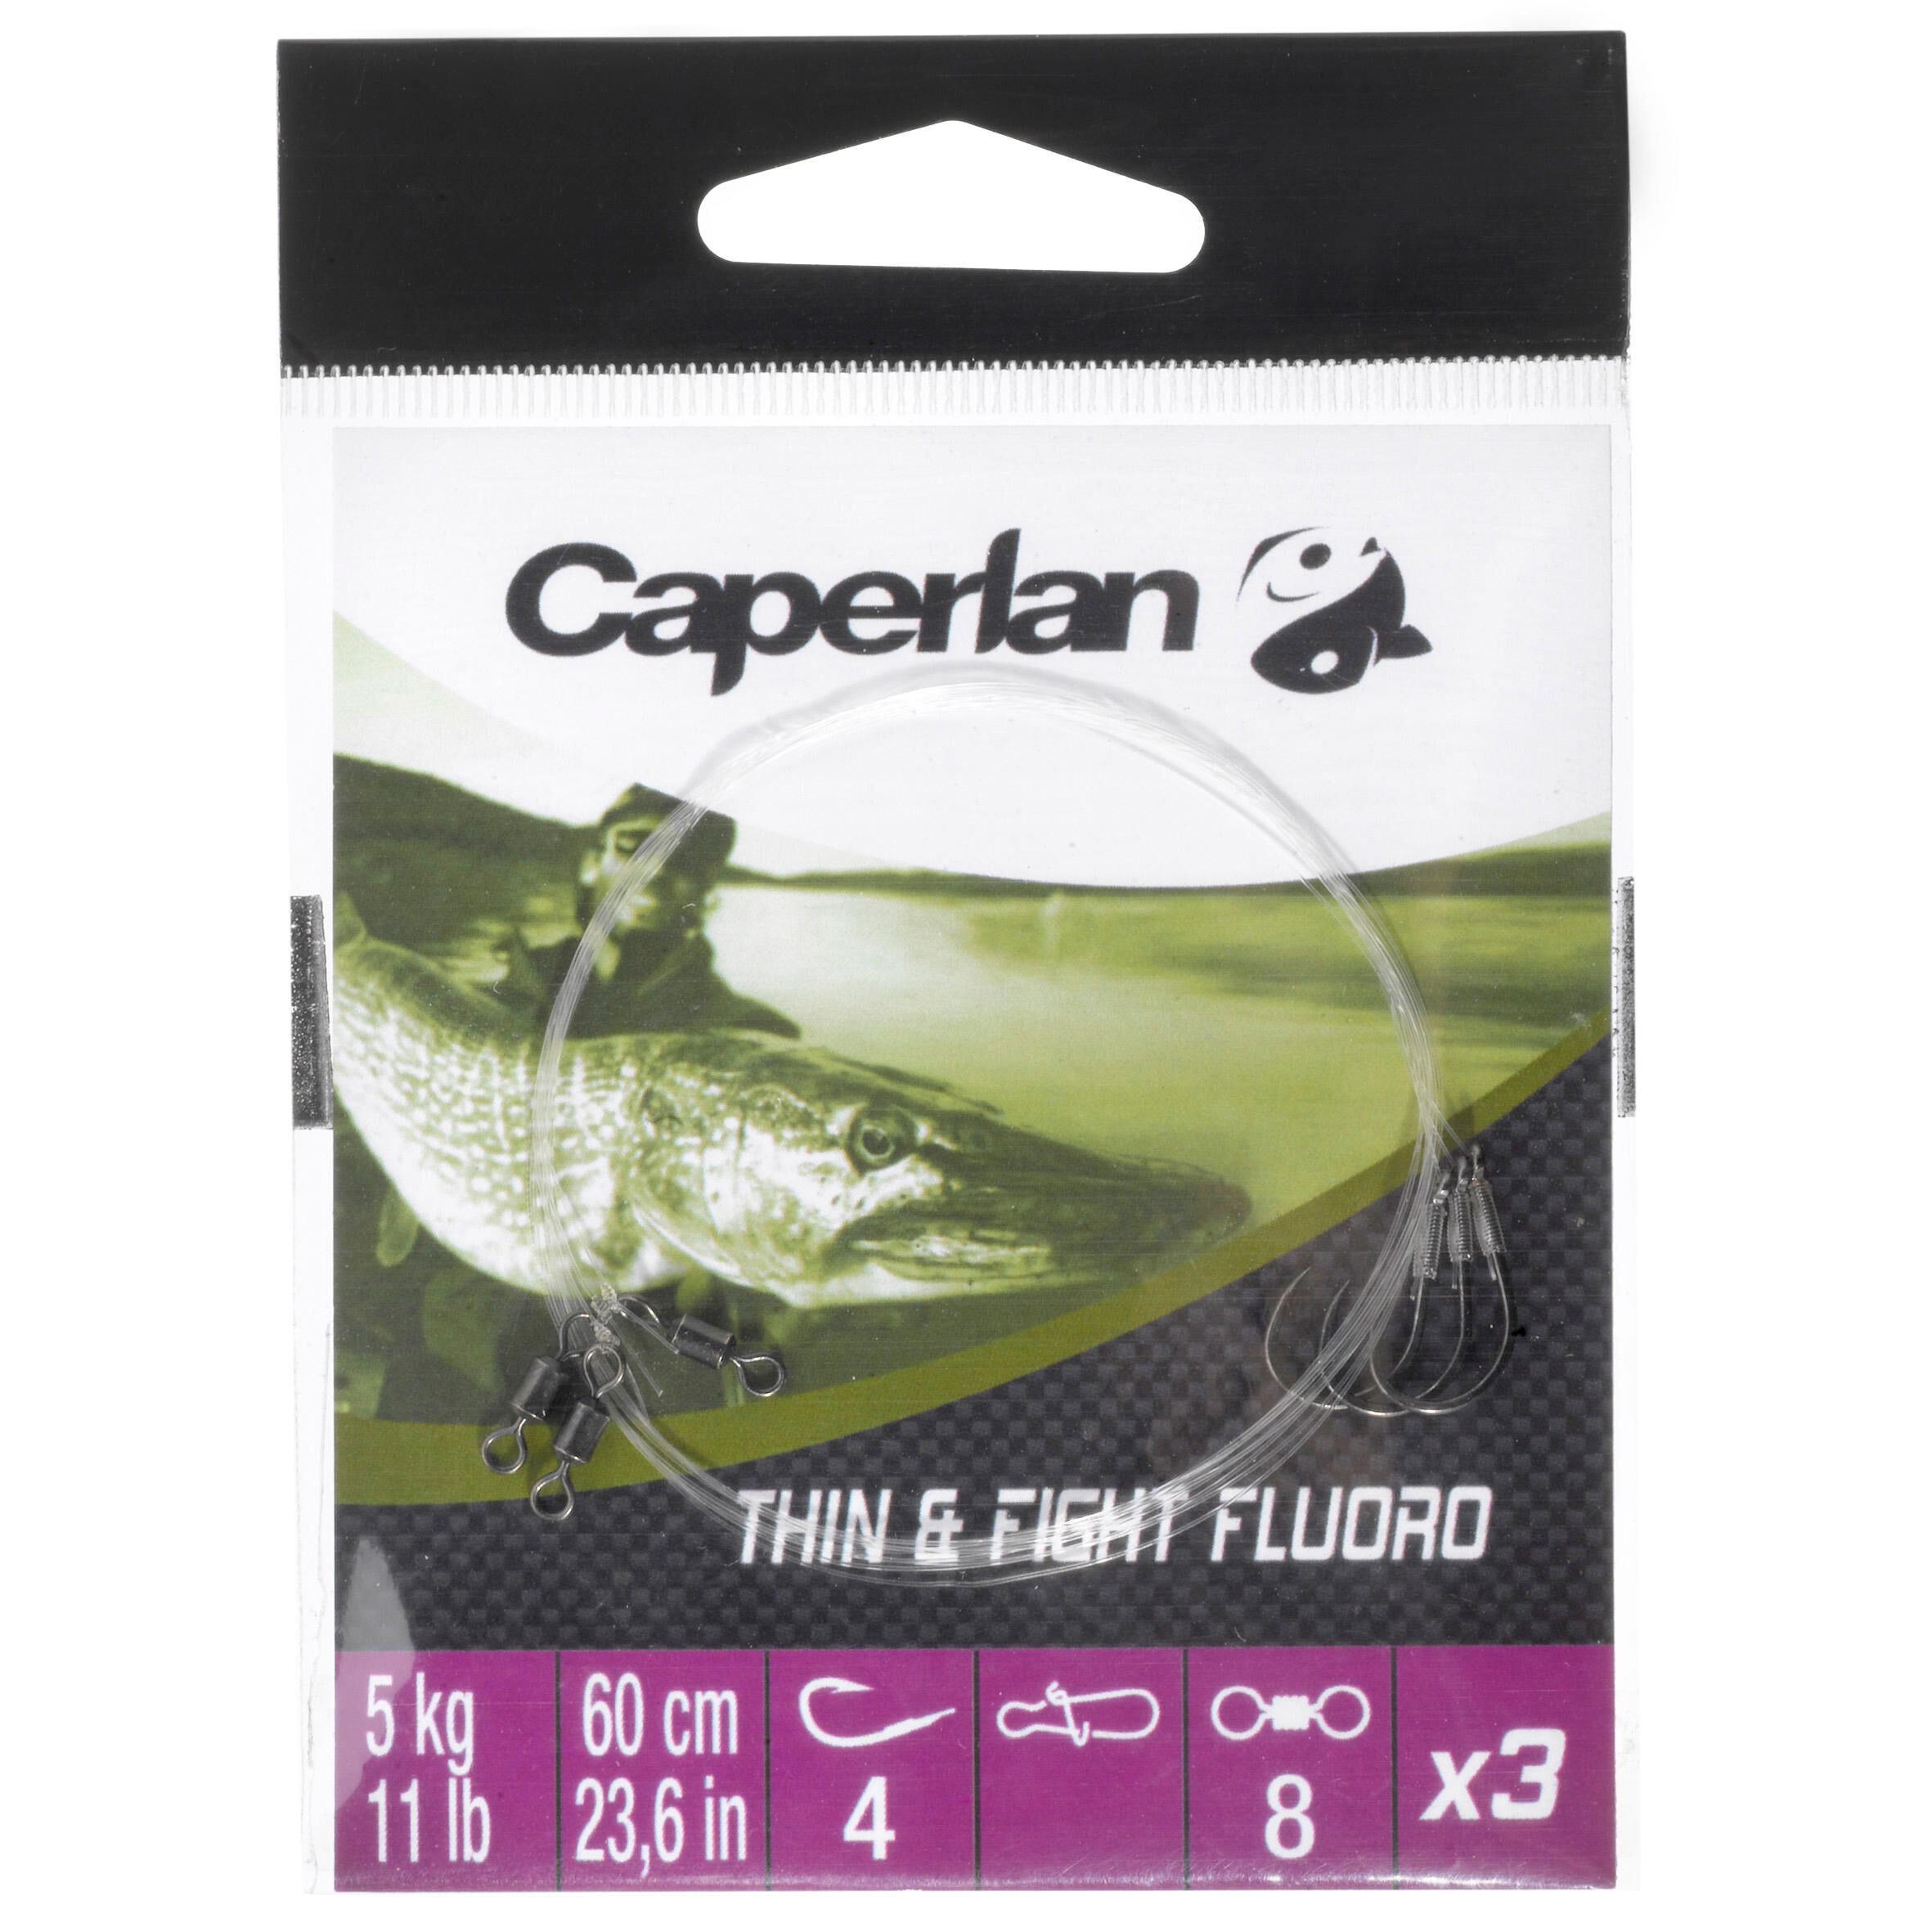 CAPERLAN THIN & FIGHT SINGLE/FLUORO 5 kg x 3 predator fishing leader